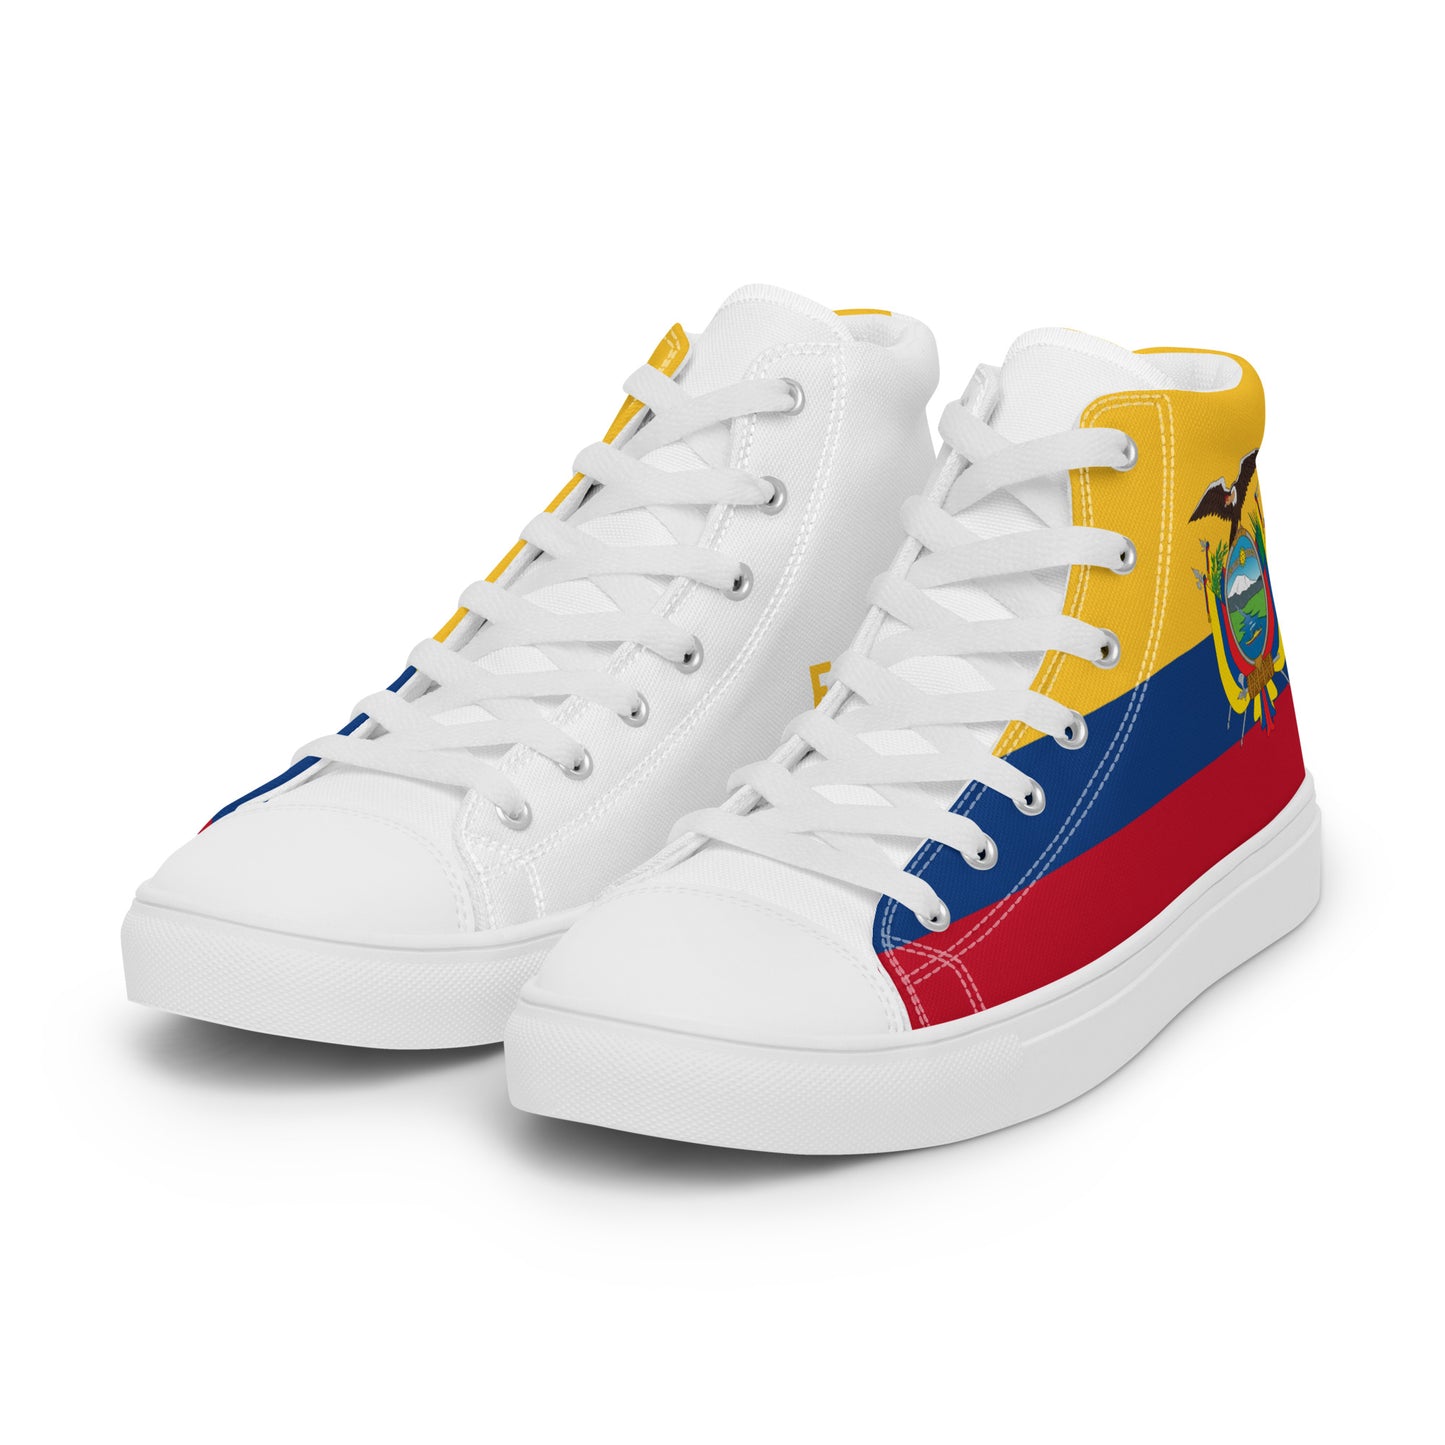 Ecuador - Men - Bandera - High top shoes